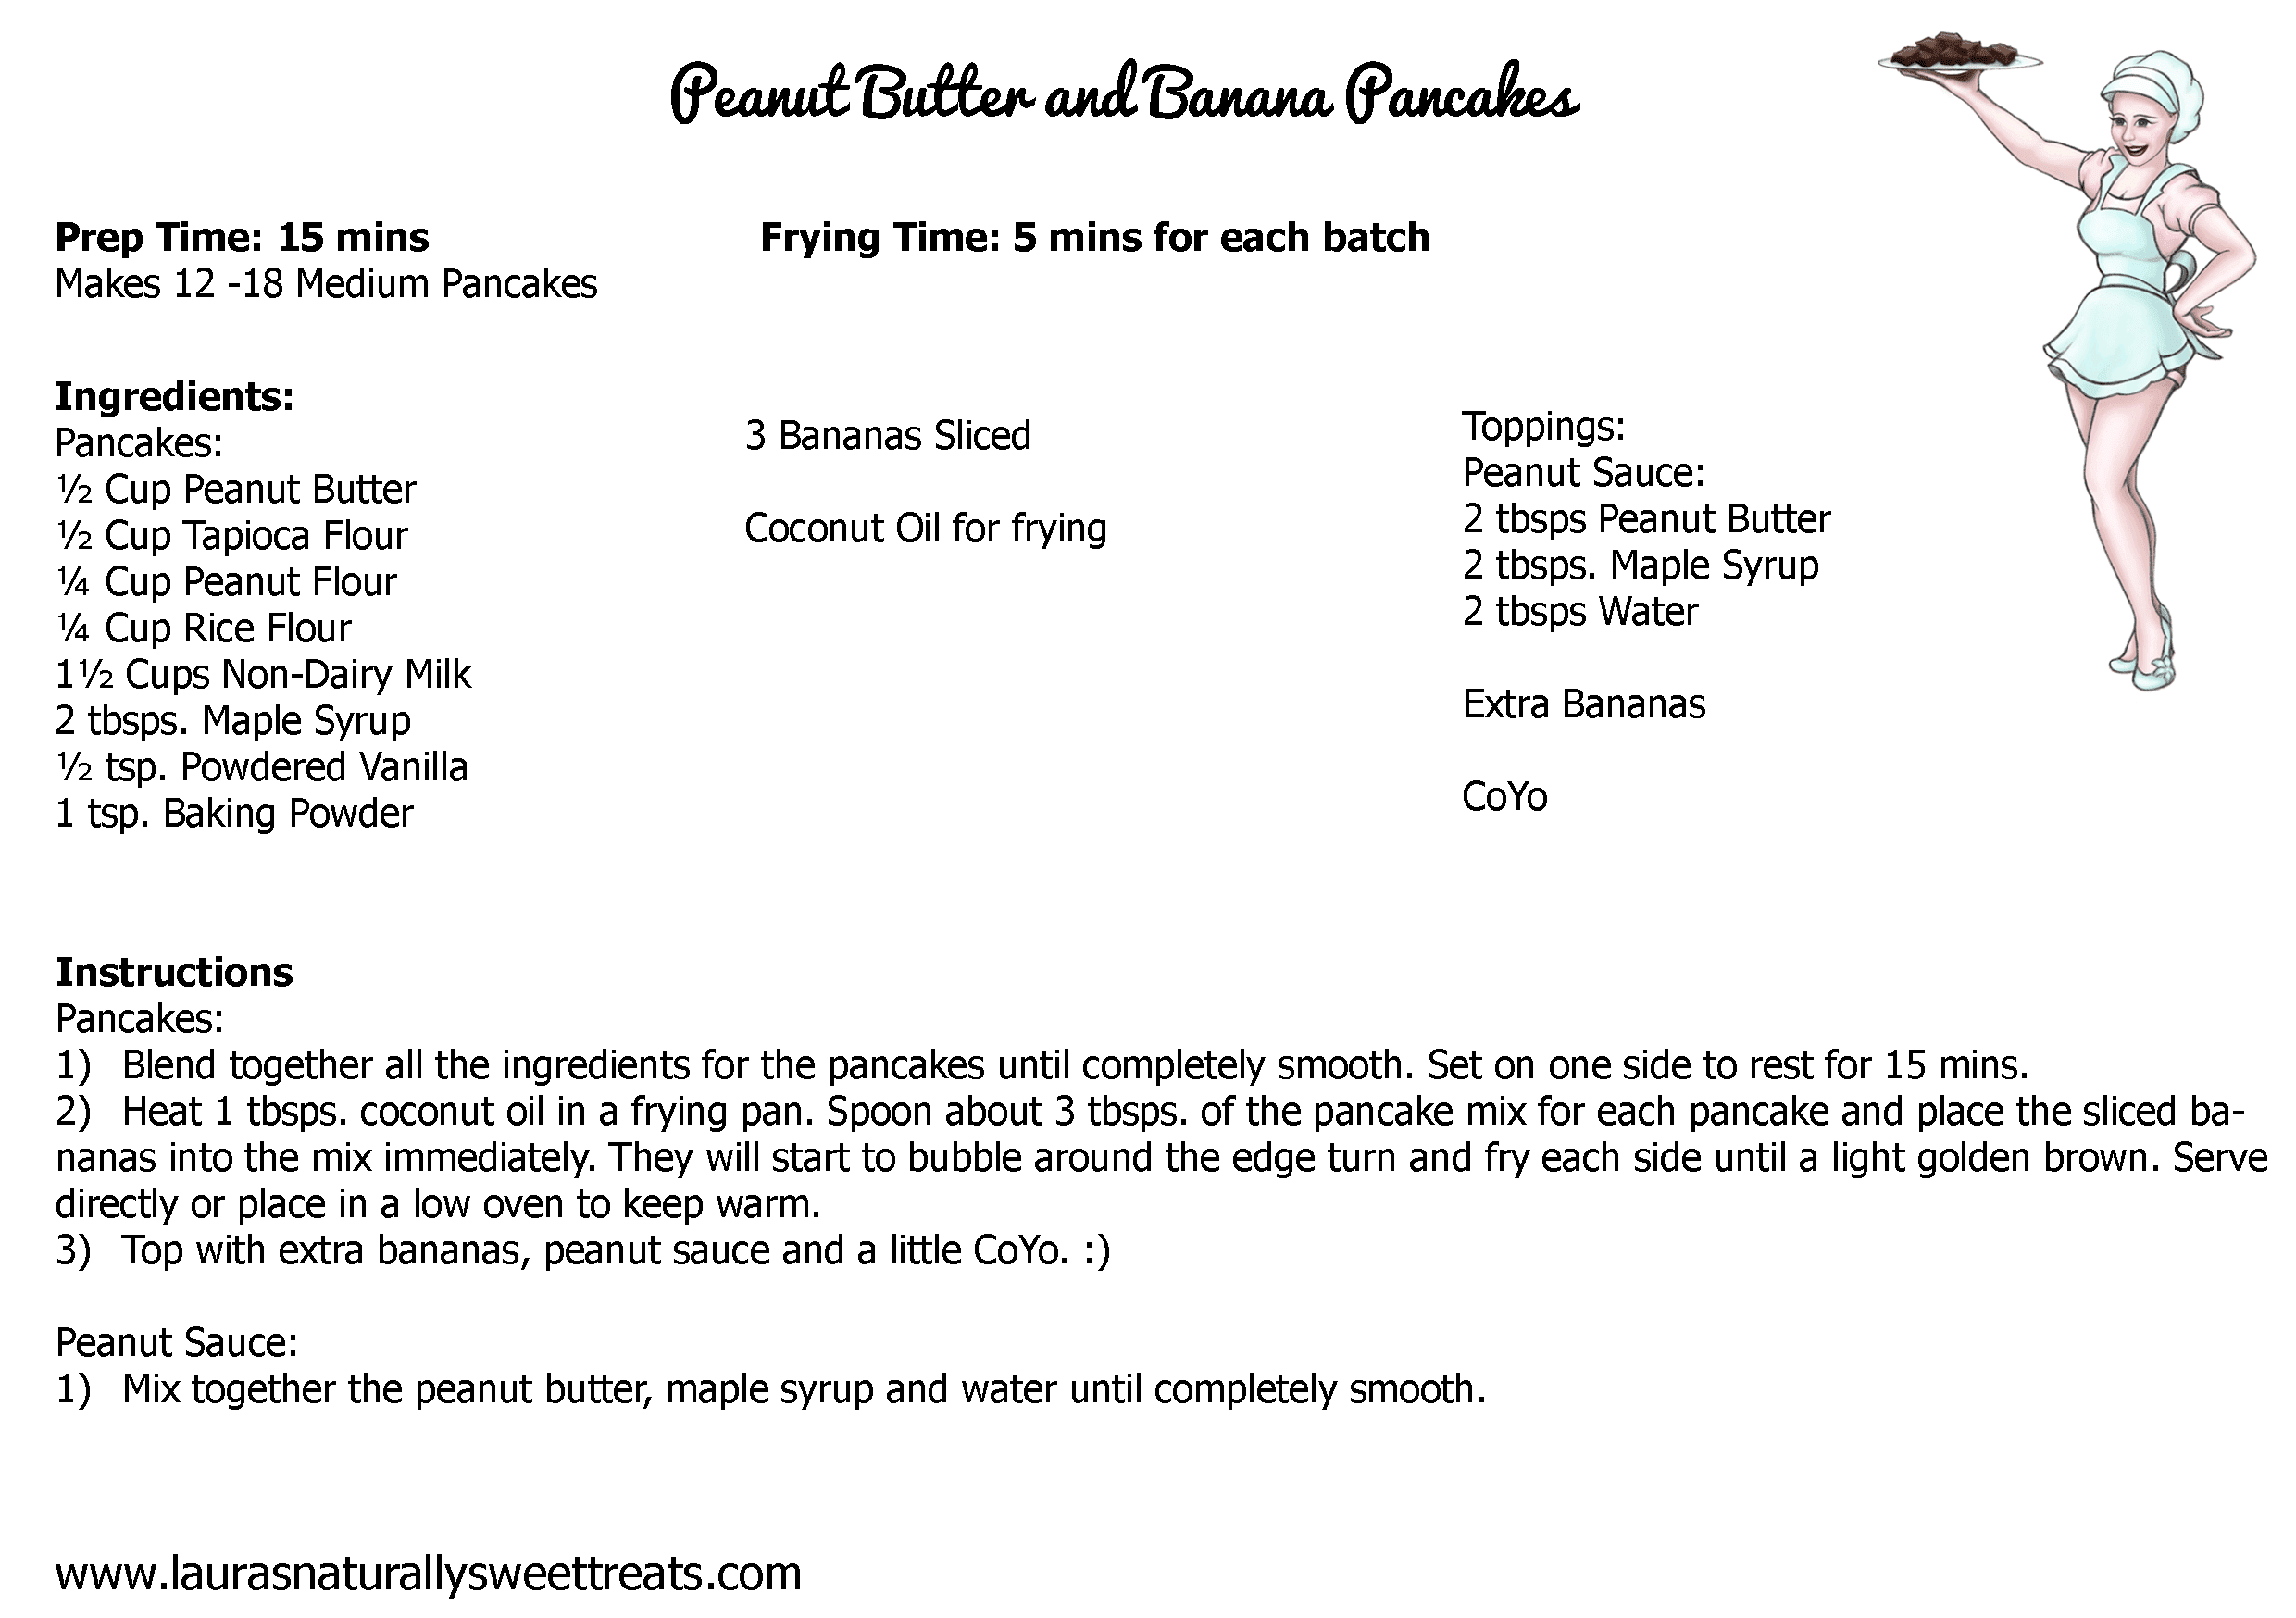 peanut butter and banana pancakes recipe card